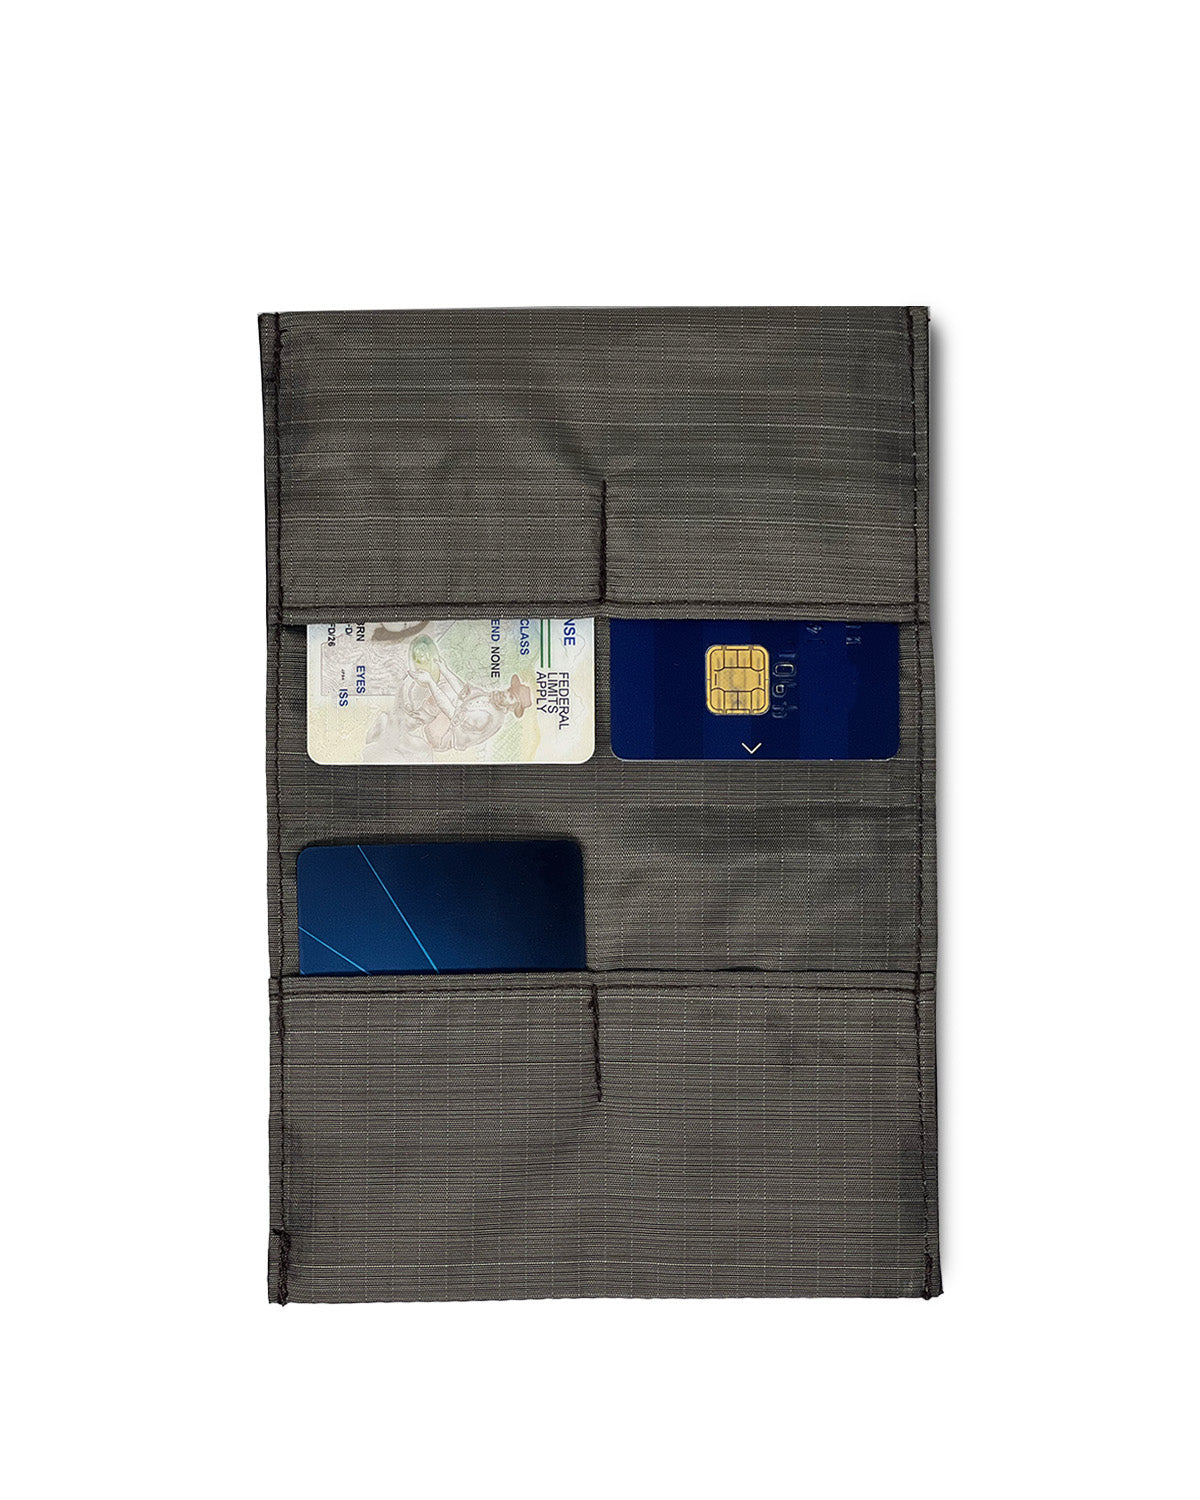 OCOMMO RFID Vegan Leather Wallet